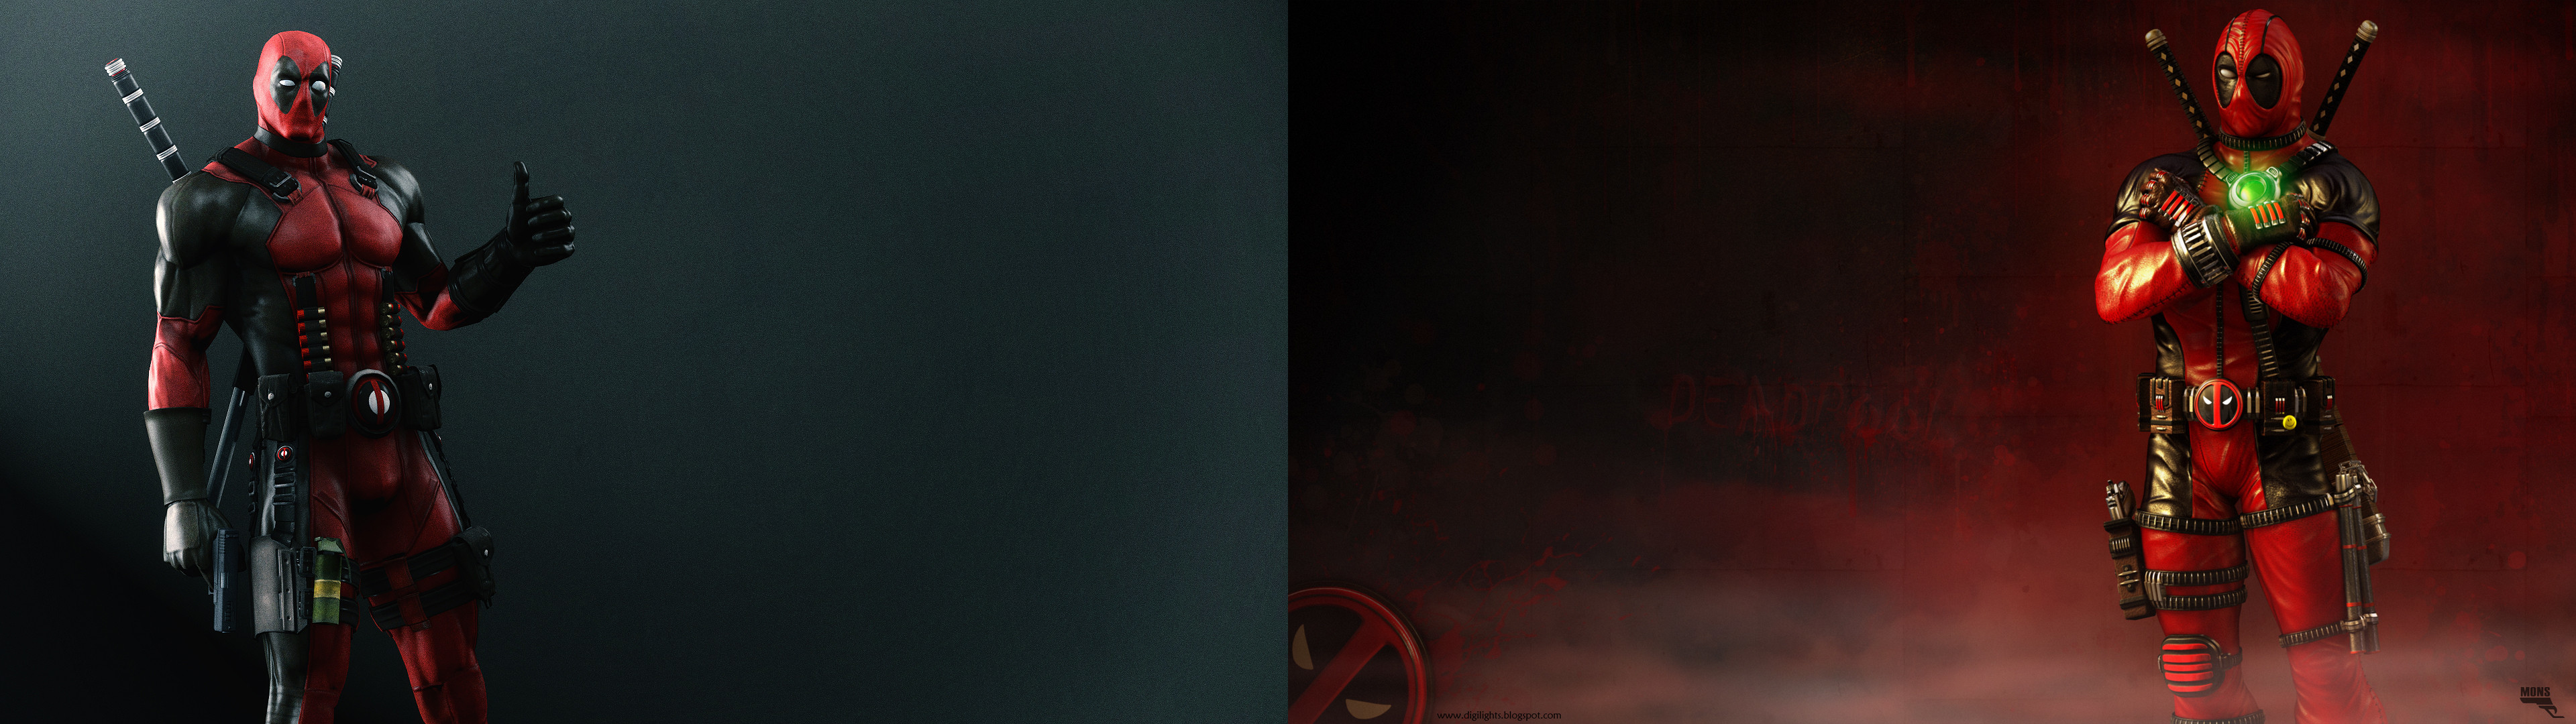 Deadpool Wallpaper Dual Monitor, 3840 X 1080